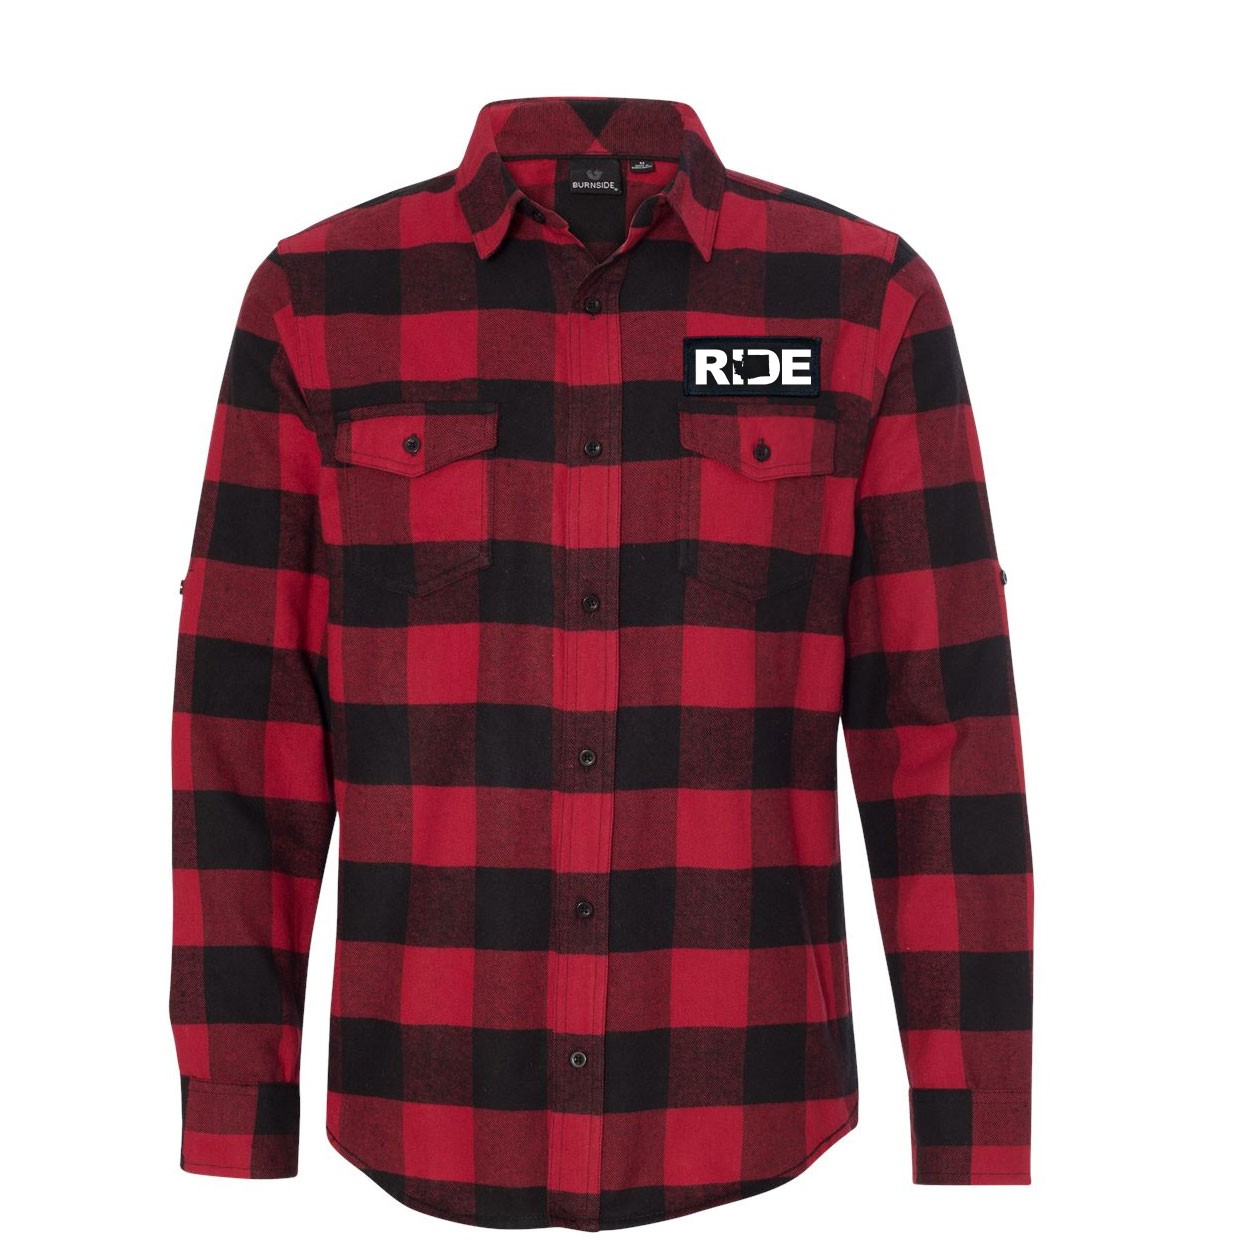 Ride Washington Classic Unisex Long Sleeve Woven Patch Flannel Shirt Red/Black Buffalo (White Logo)